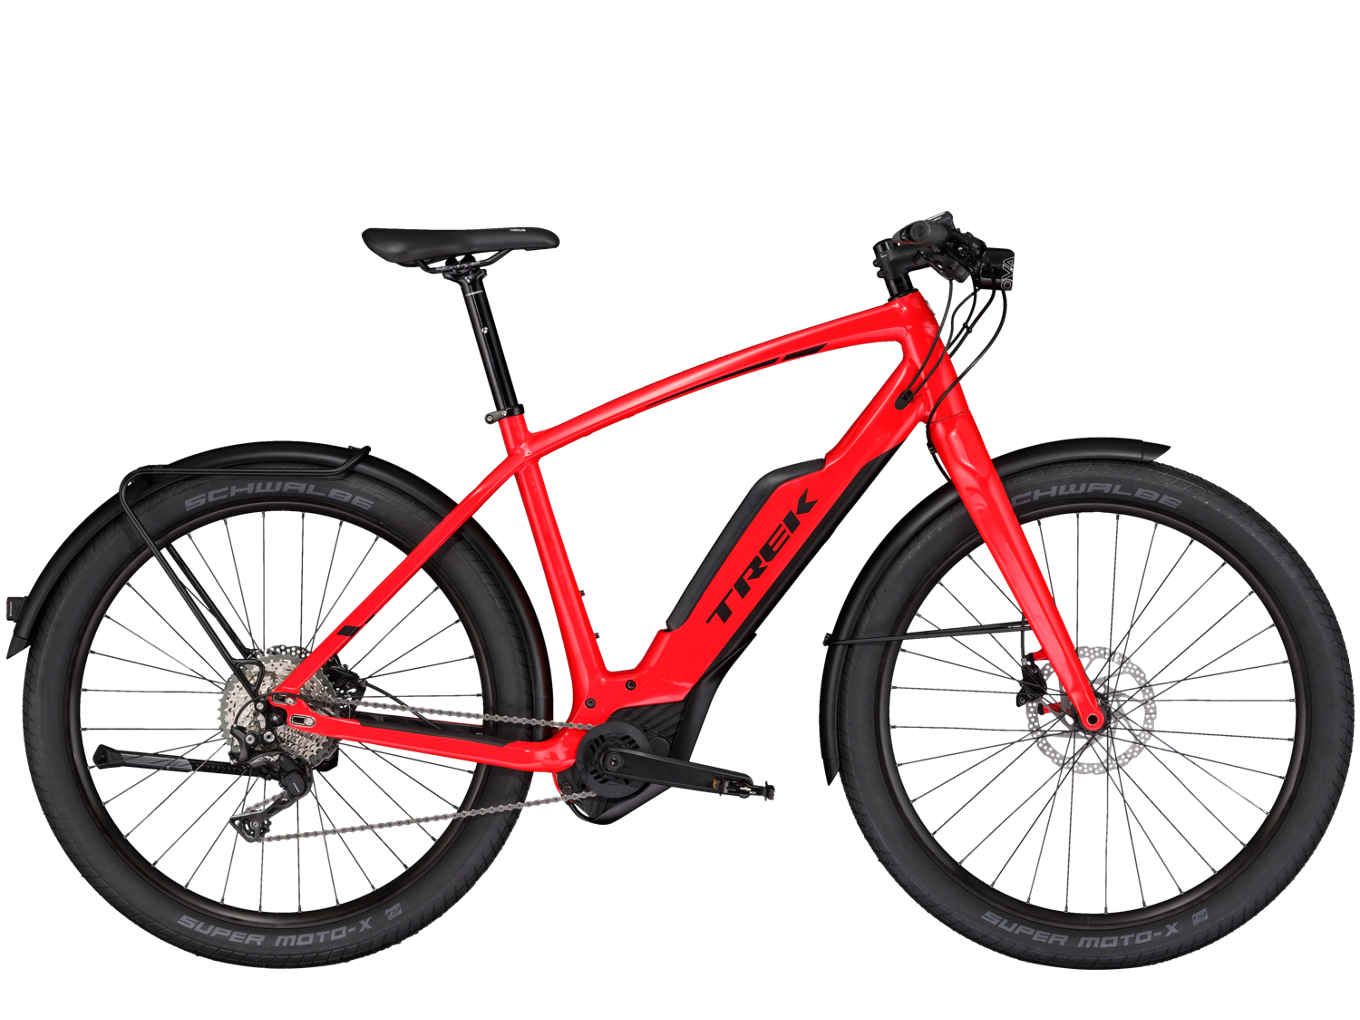 Land vehicle, Bicycle, Bicycle wheel, Bicycle frame, Bicycle part, Vehicle, Bicycle tire, Bicycle fork, Spoke, Bicycle stem, 